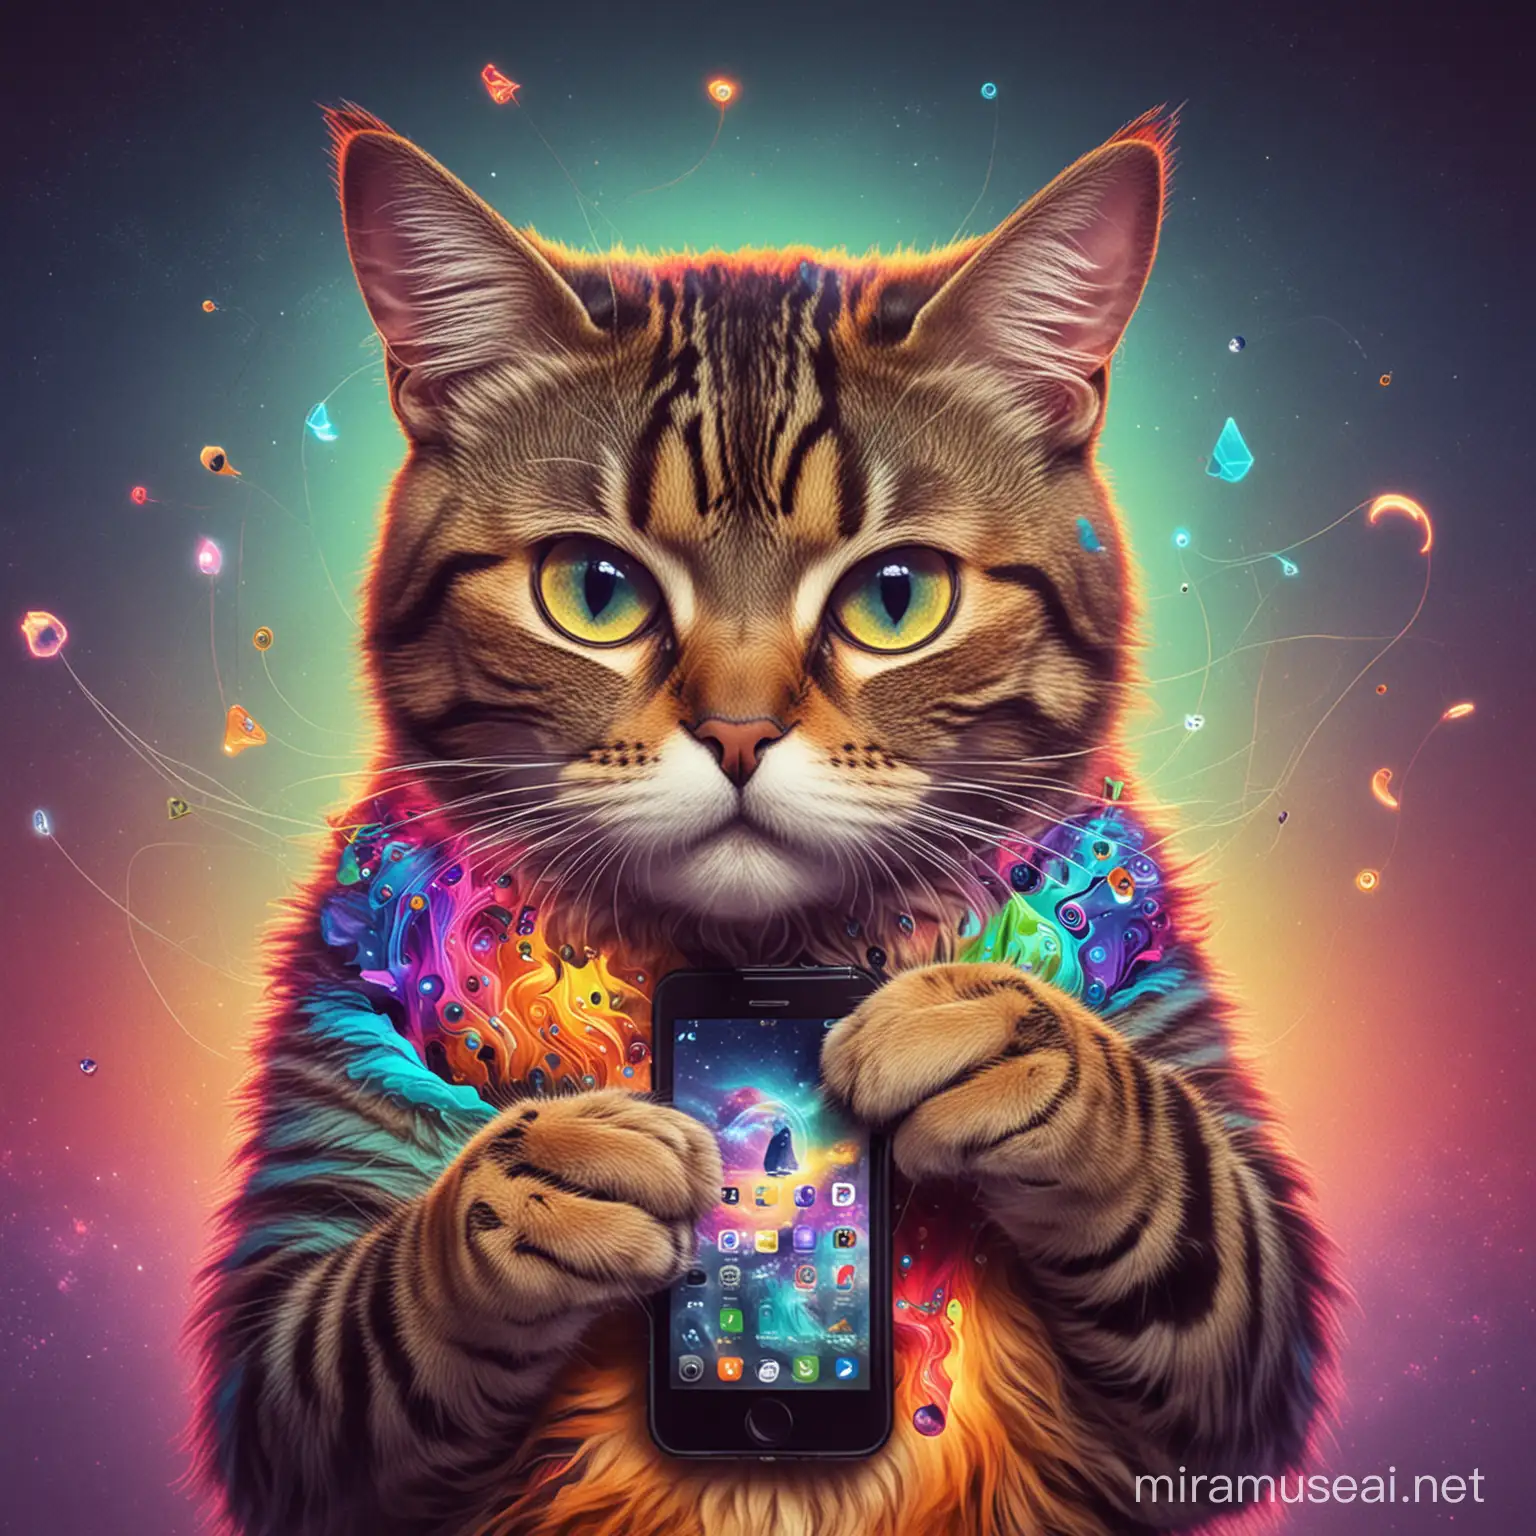 Psychedelic Cat with Cellphone in Social Media Scene